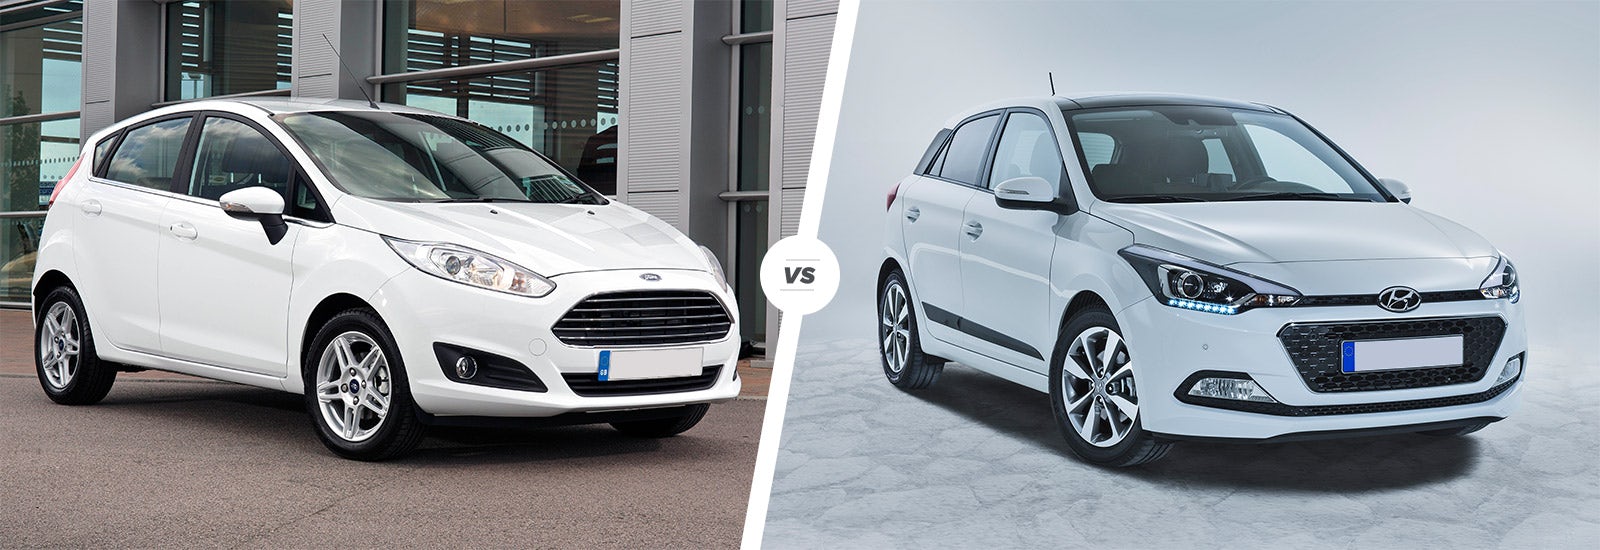 Ford Fiesta vs Hyundai i20 comparison carwow